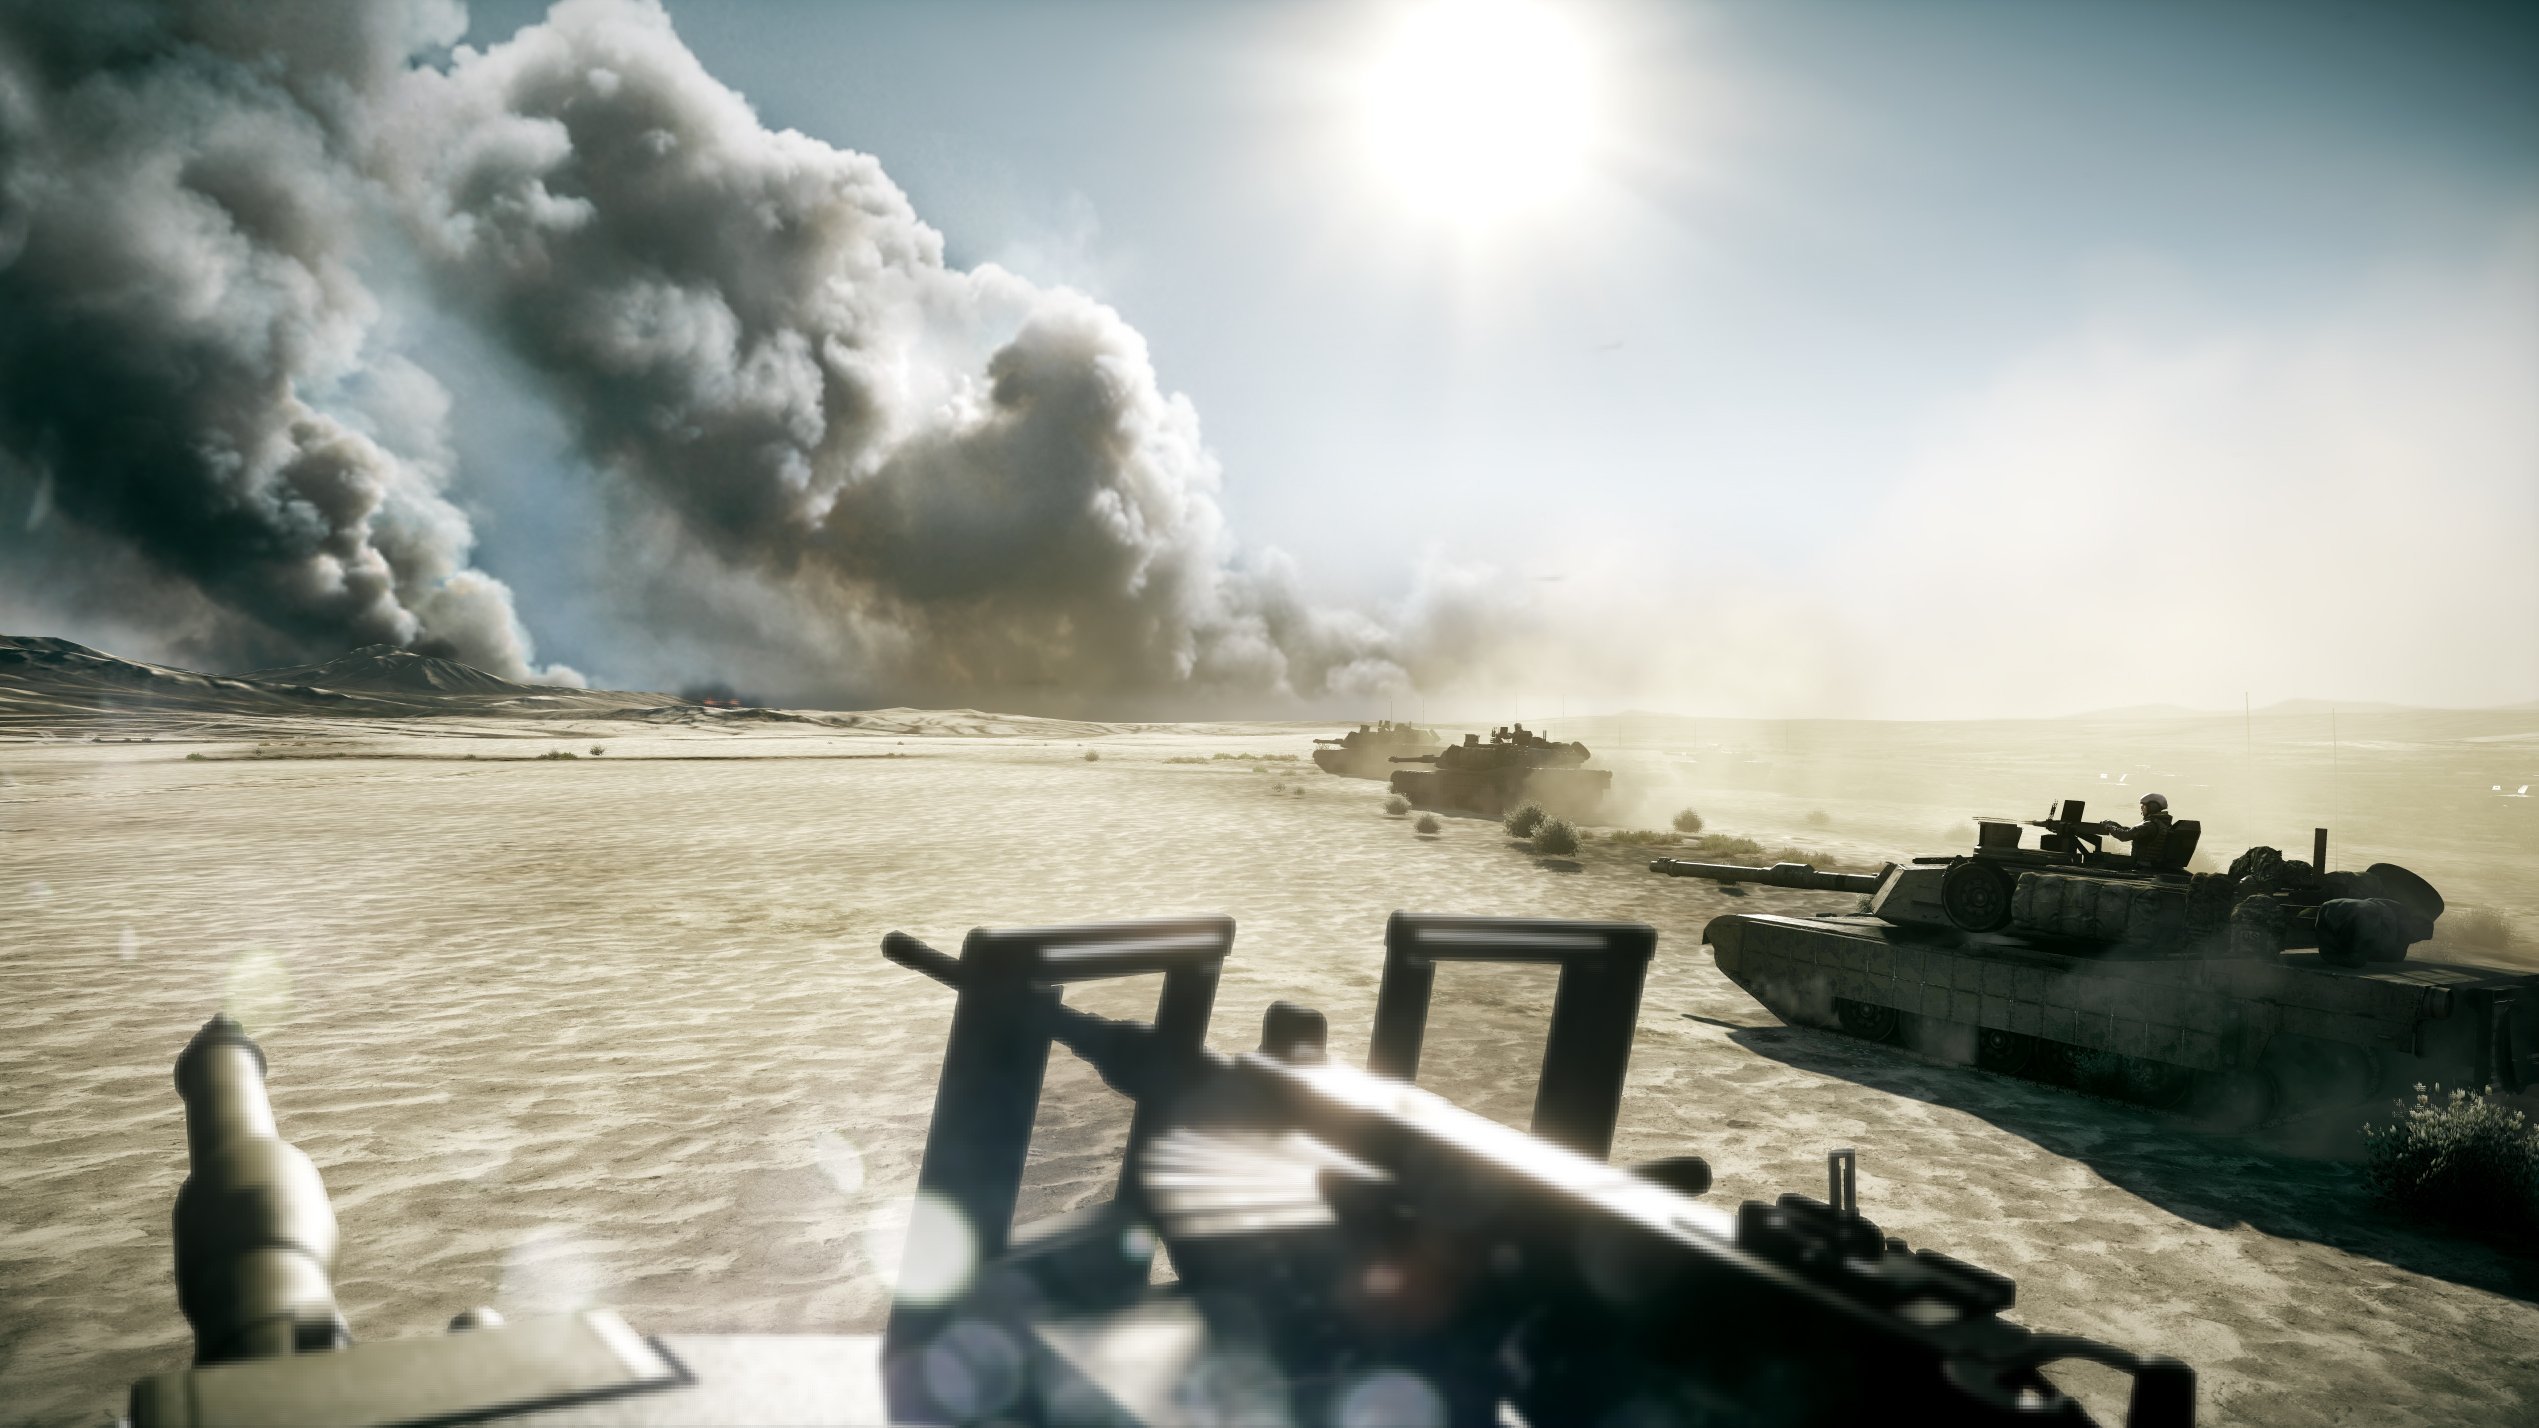 Battlefield 3 – PC Origin [Online Game Code]